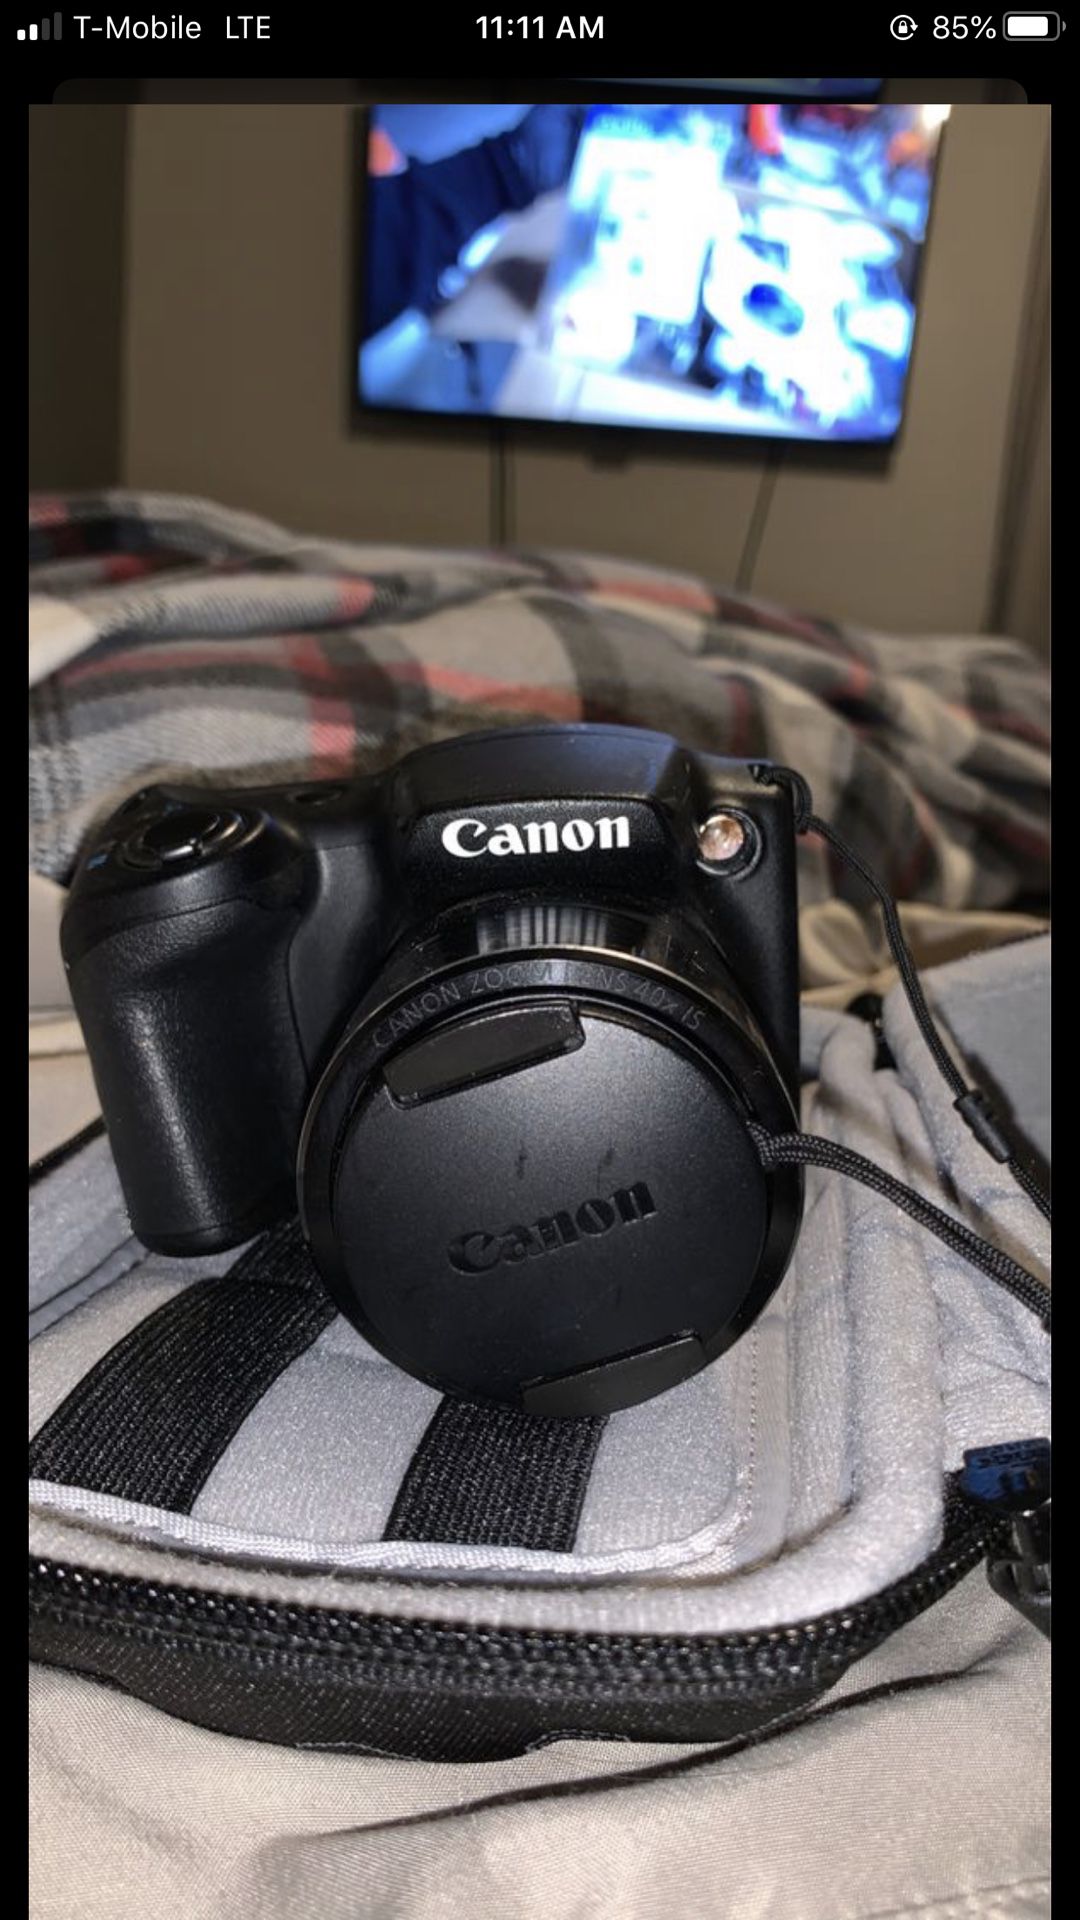 Canon powershot SX410 IS